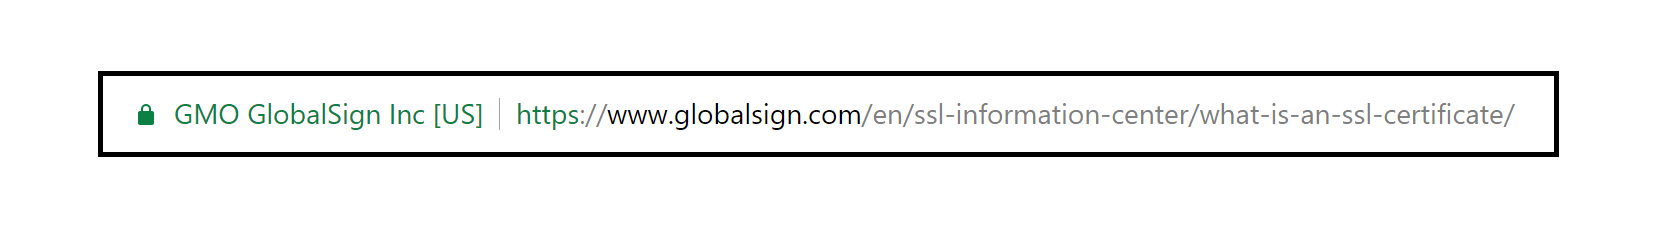 Lock Icon on URL